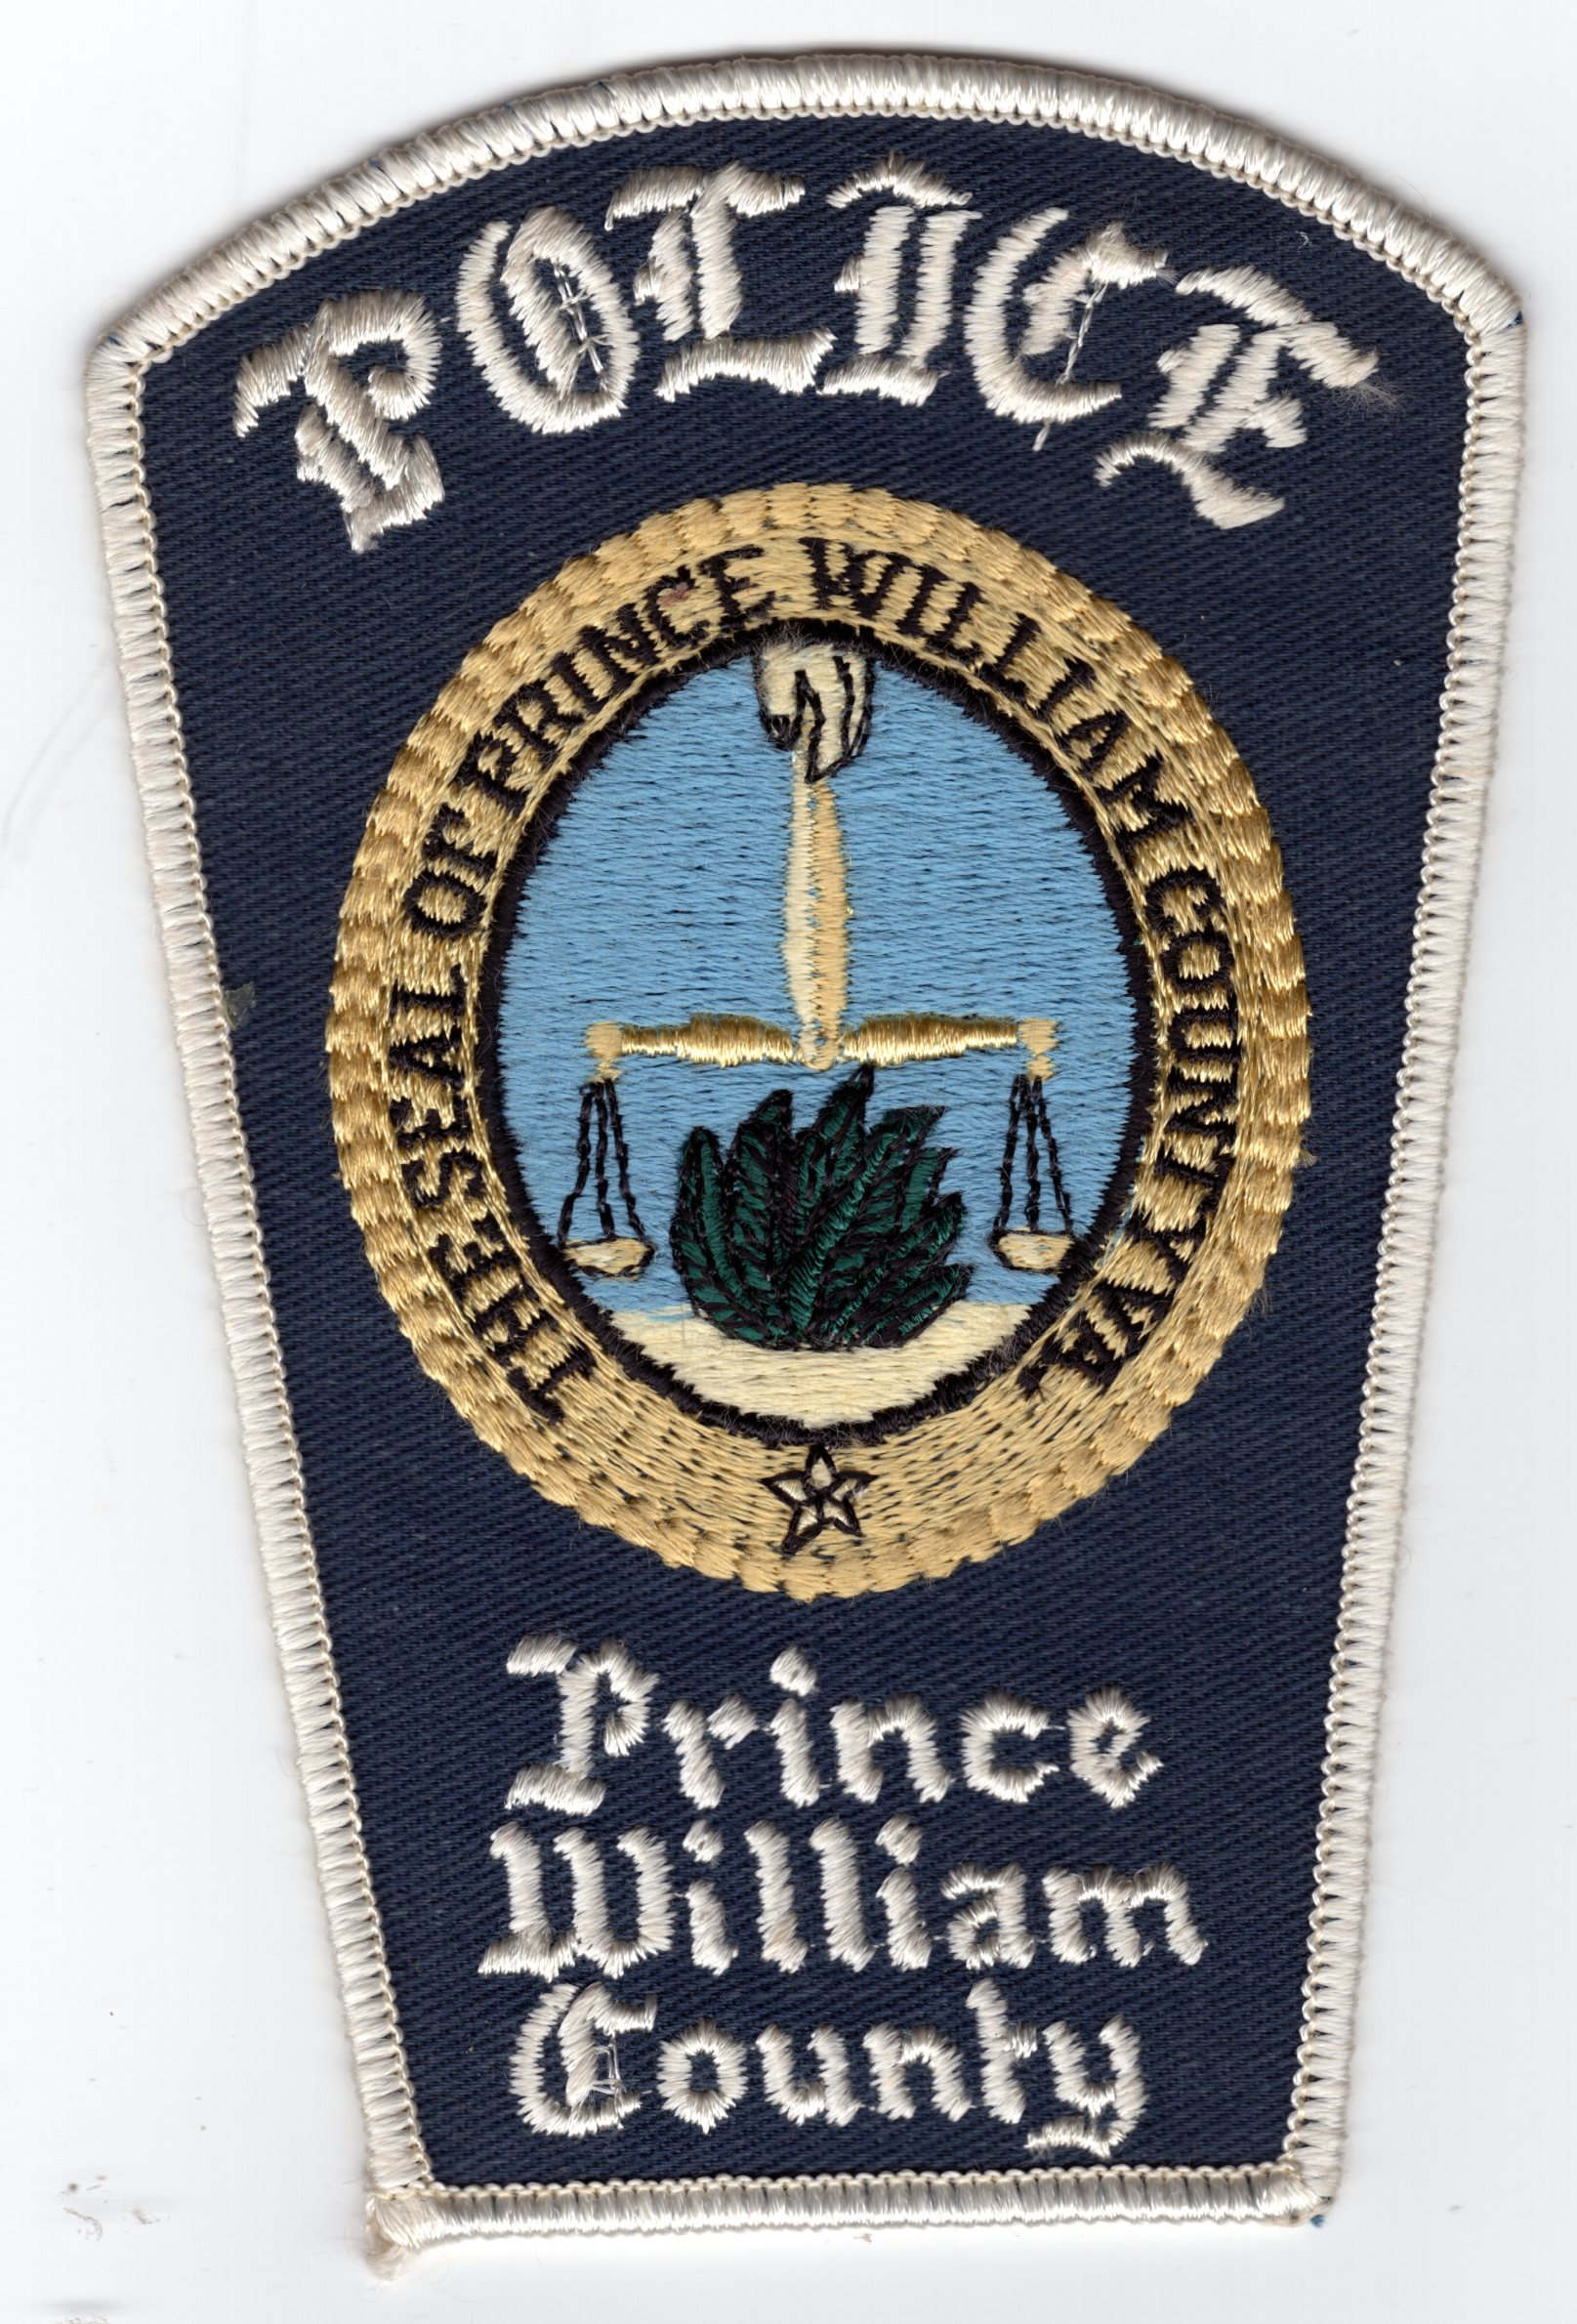 Prince William County VA Police Department Police Motor Units LLC